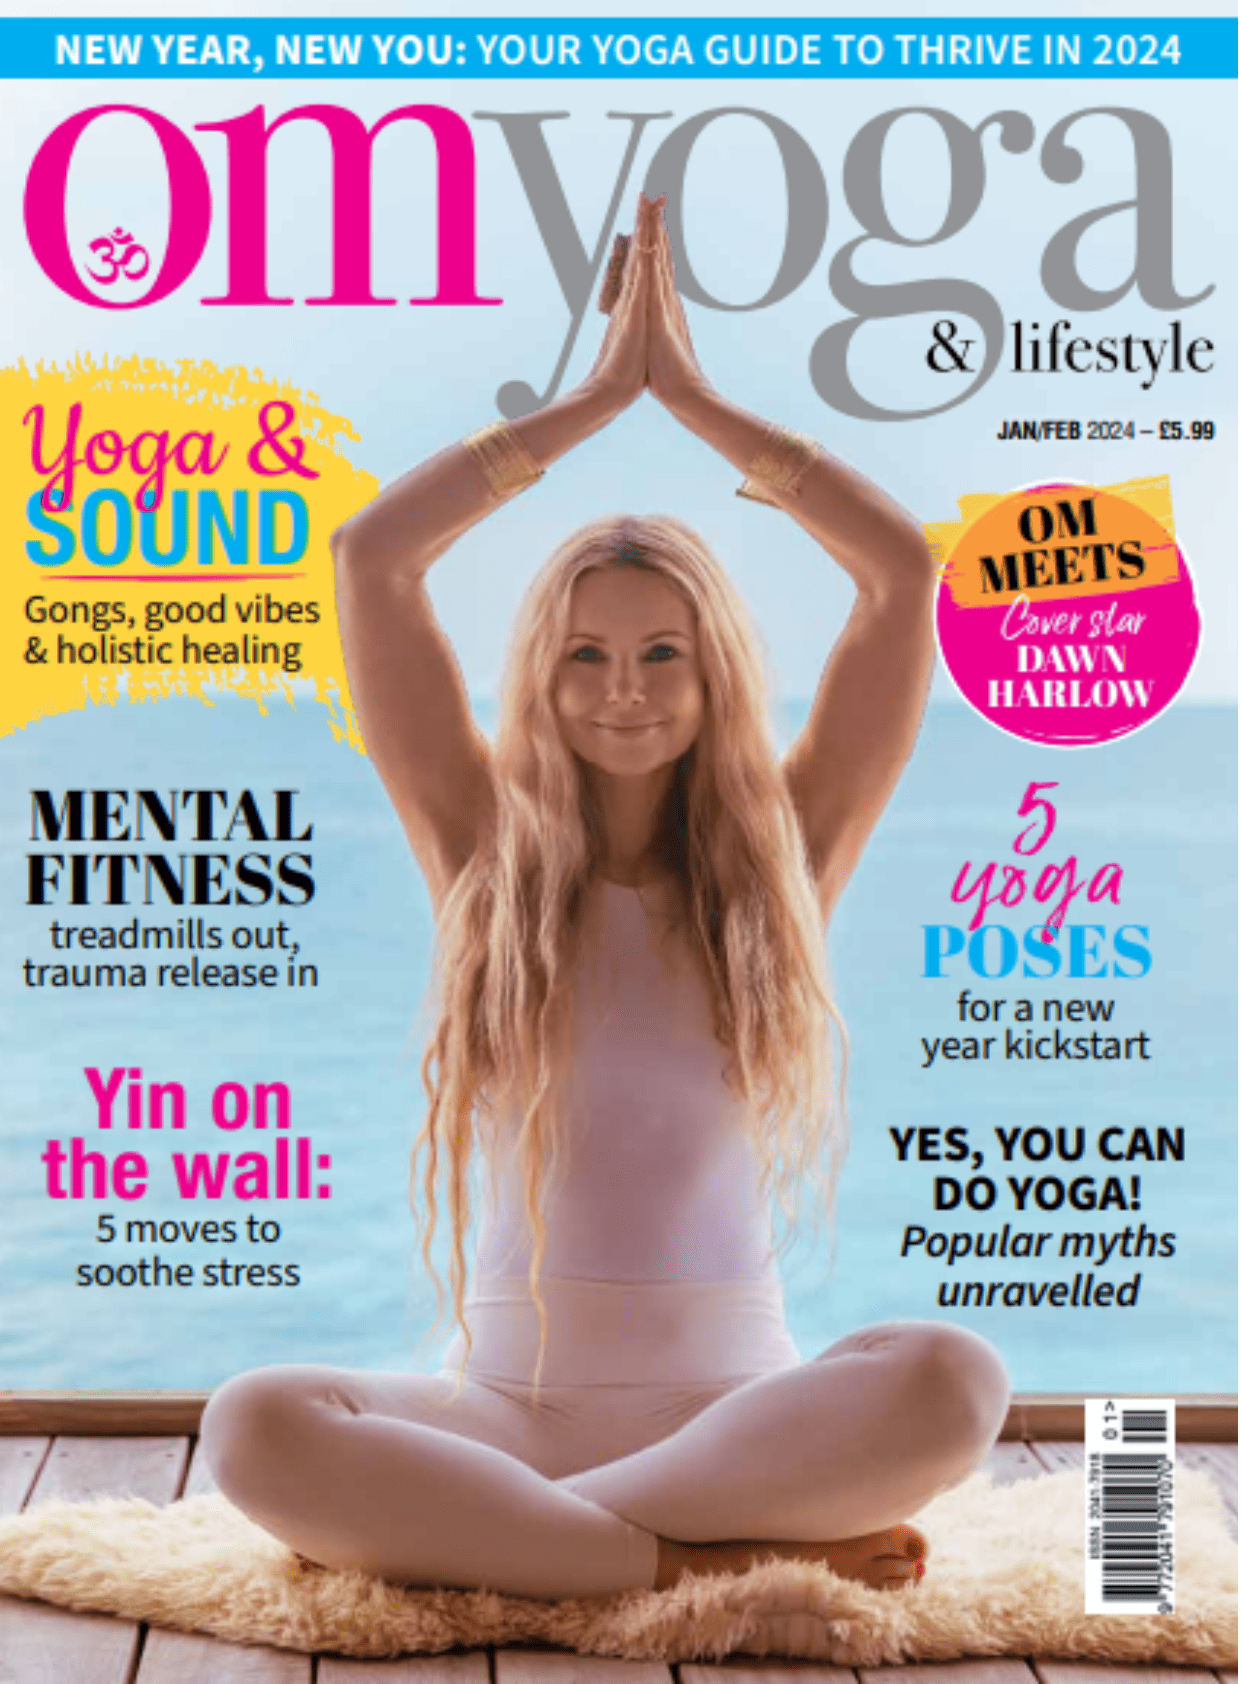 What Madonna's yoga guru taught me about self-discipline | Vogue India